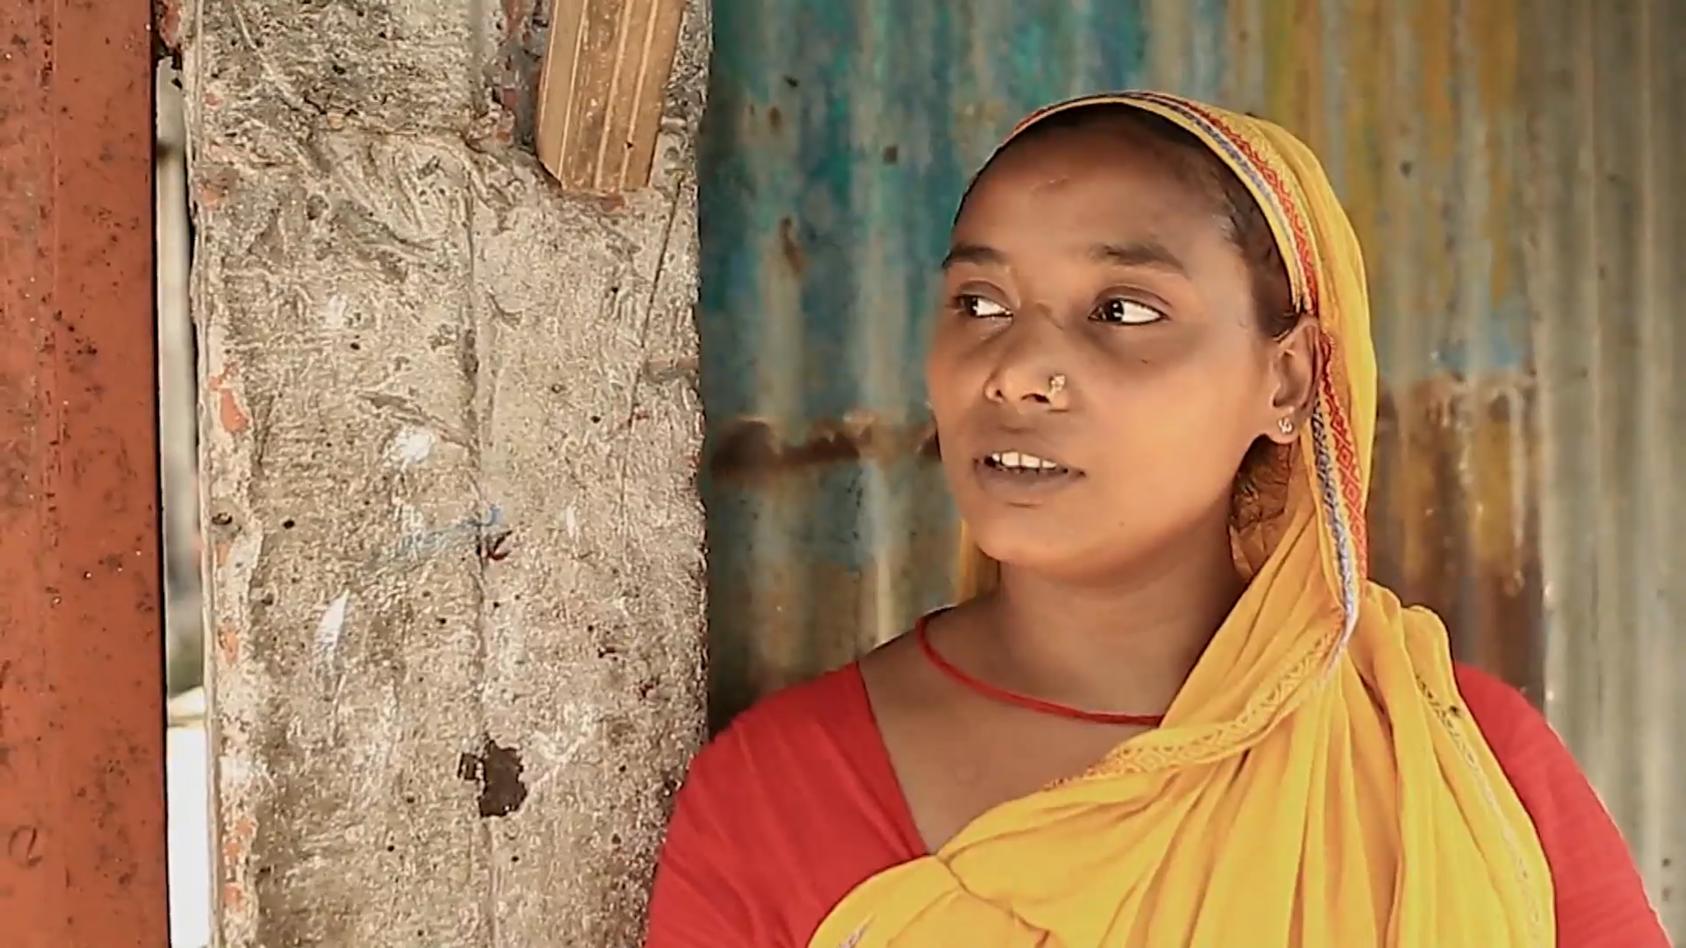 Bordell in Bangladesch wegen Corona geschlossen Frauen kämpfen ums Überleben